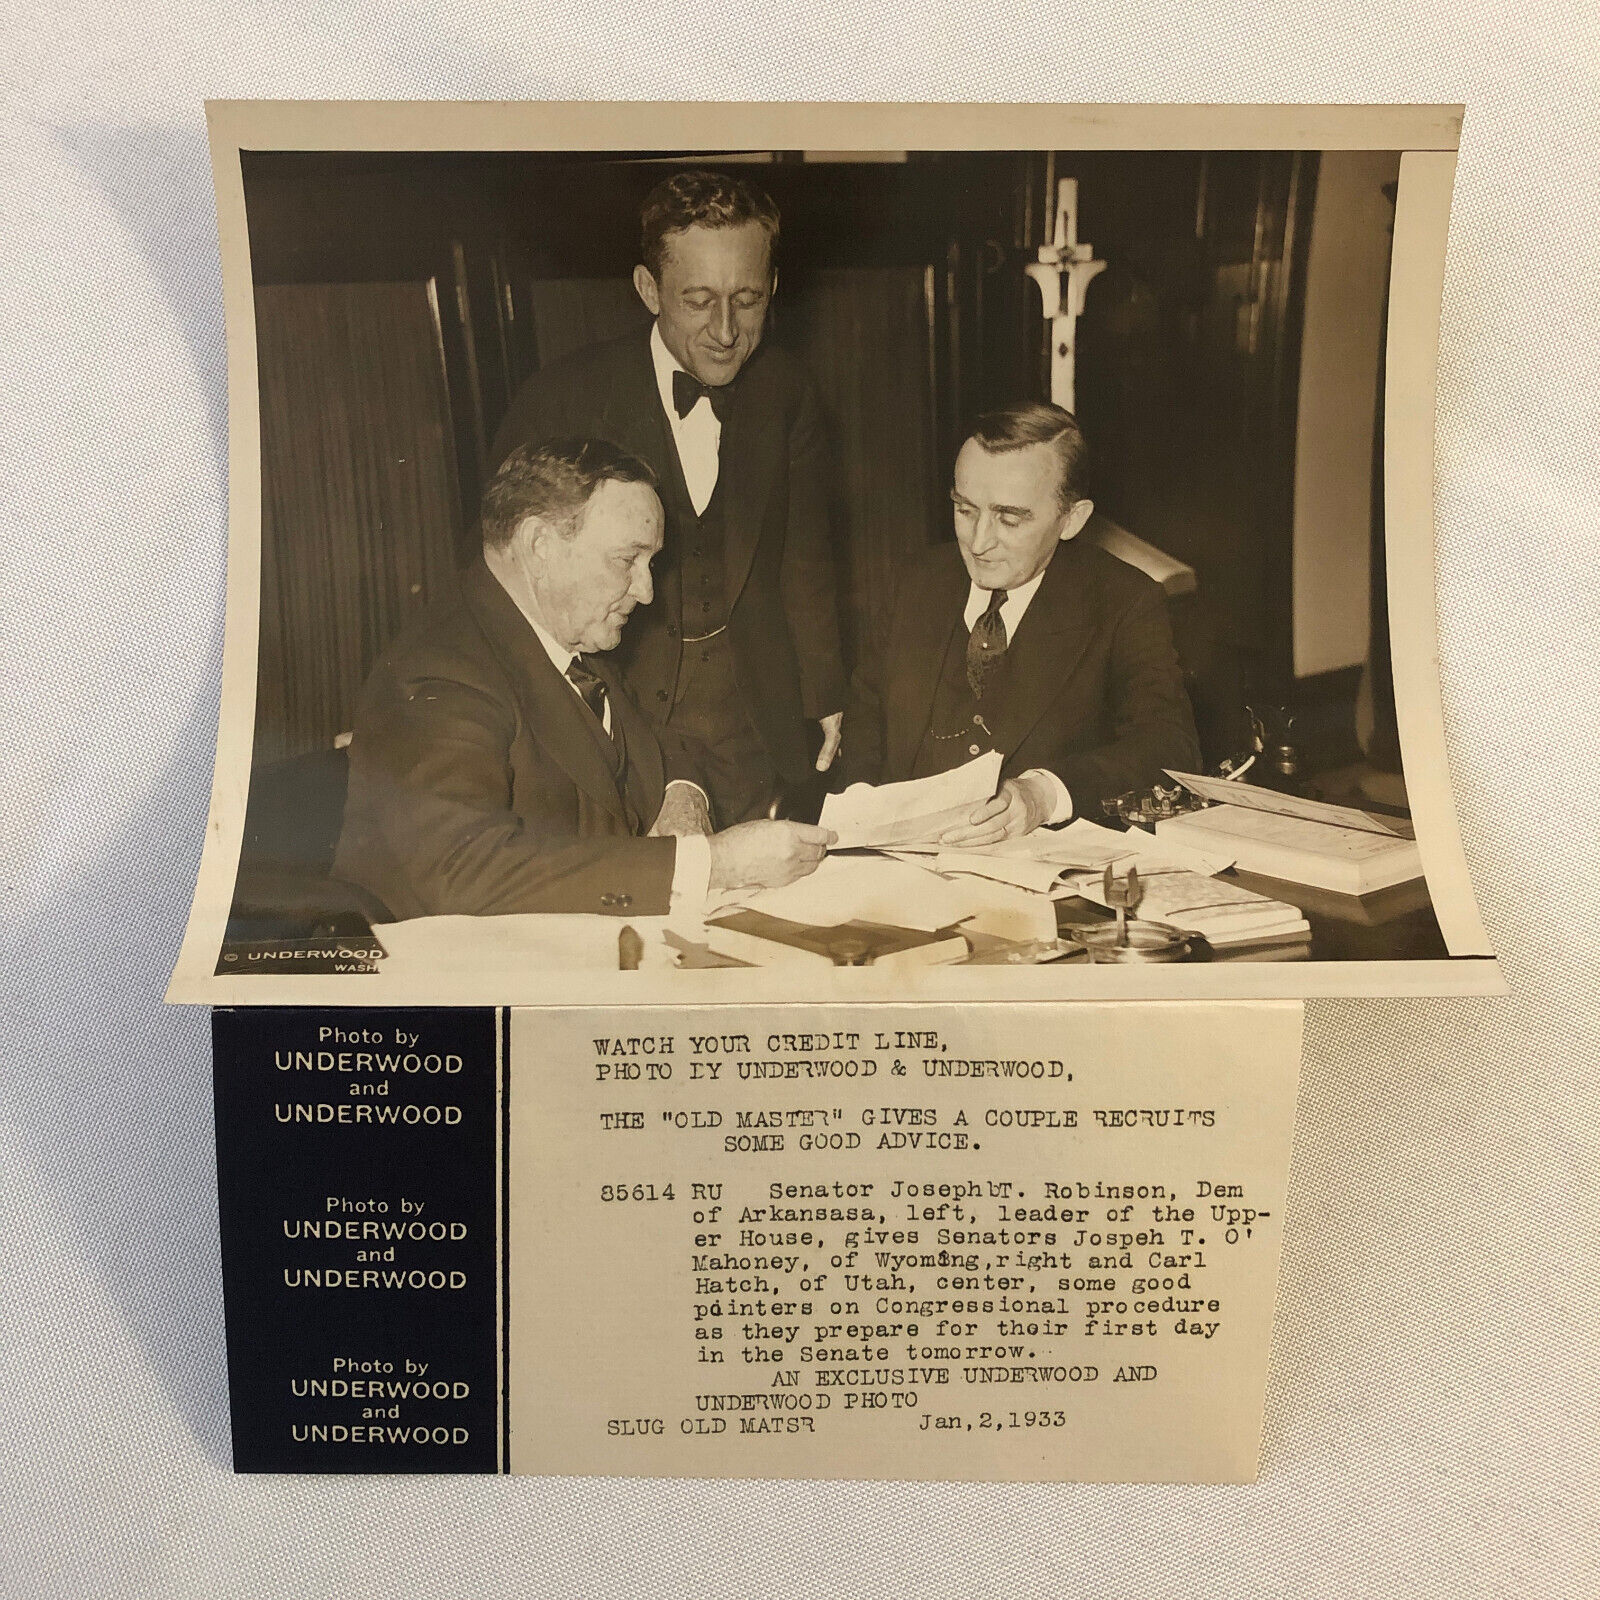 Press Photo Photograph Washington Senators Underwood & Underwood 1933 Utah +